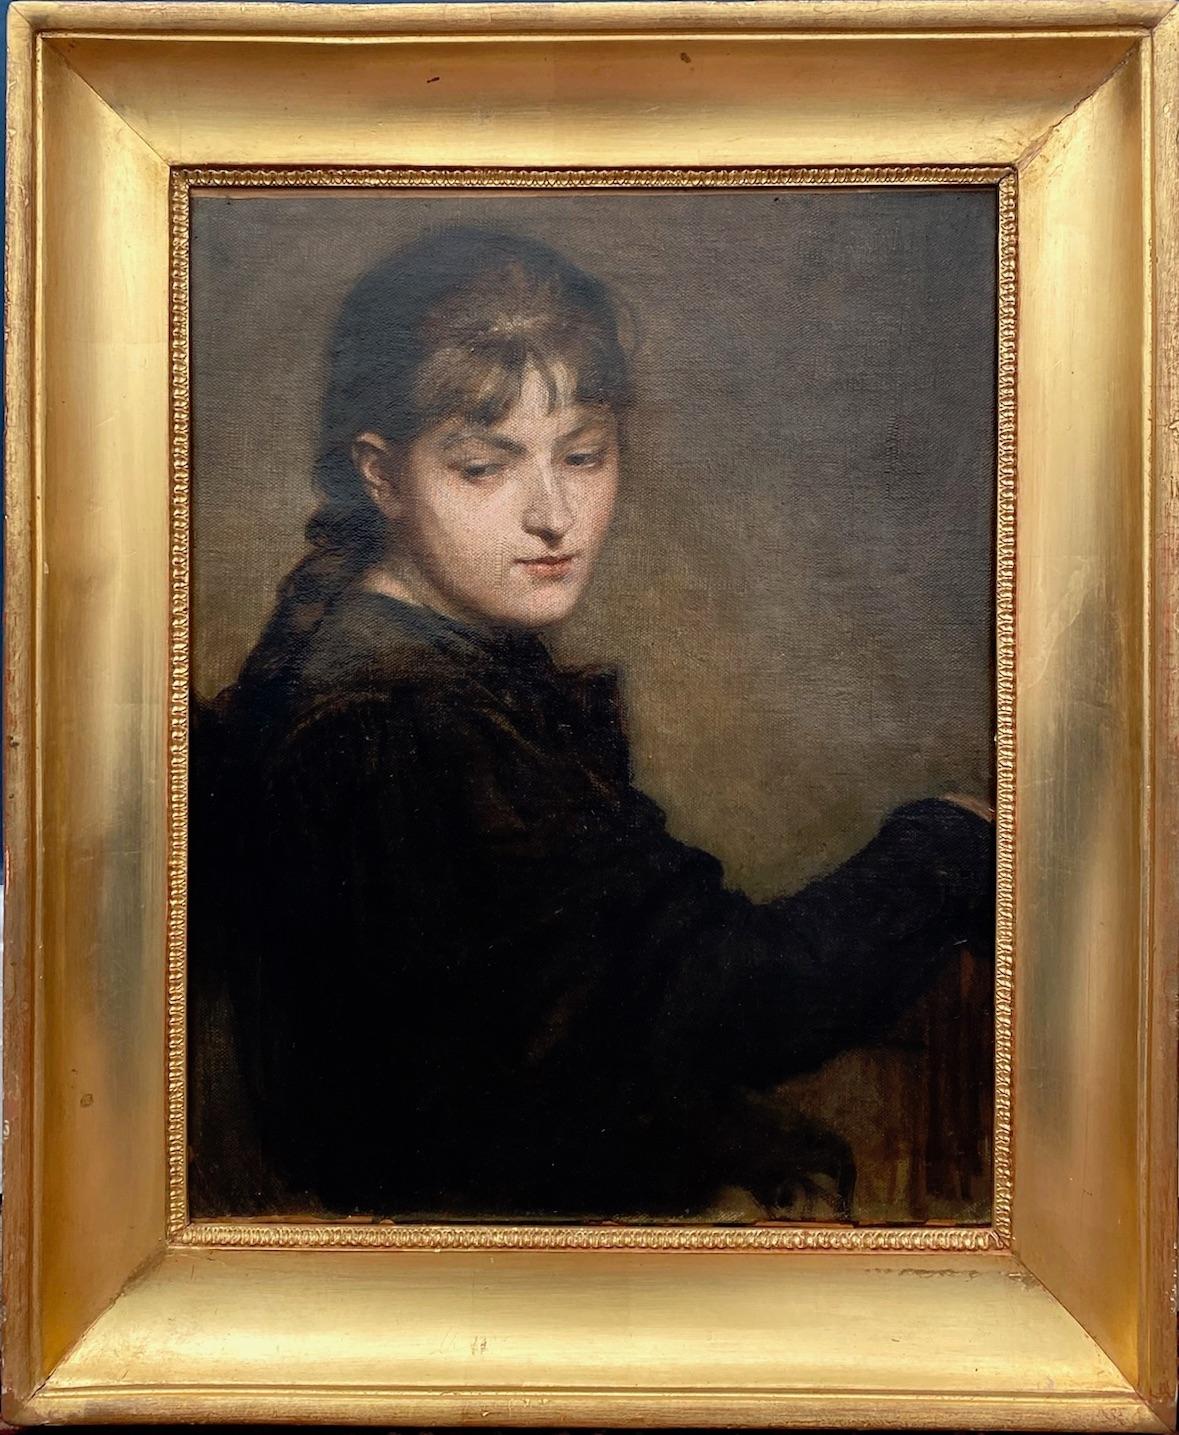 Unknown Portrait Painting – Die junge Frau malt, die Künstlerin, anonymes Ölgemälde eines Meisters, 19. Jahrhunderts